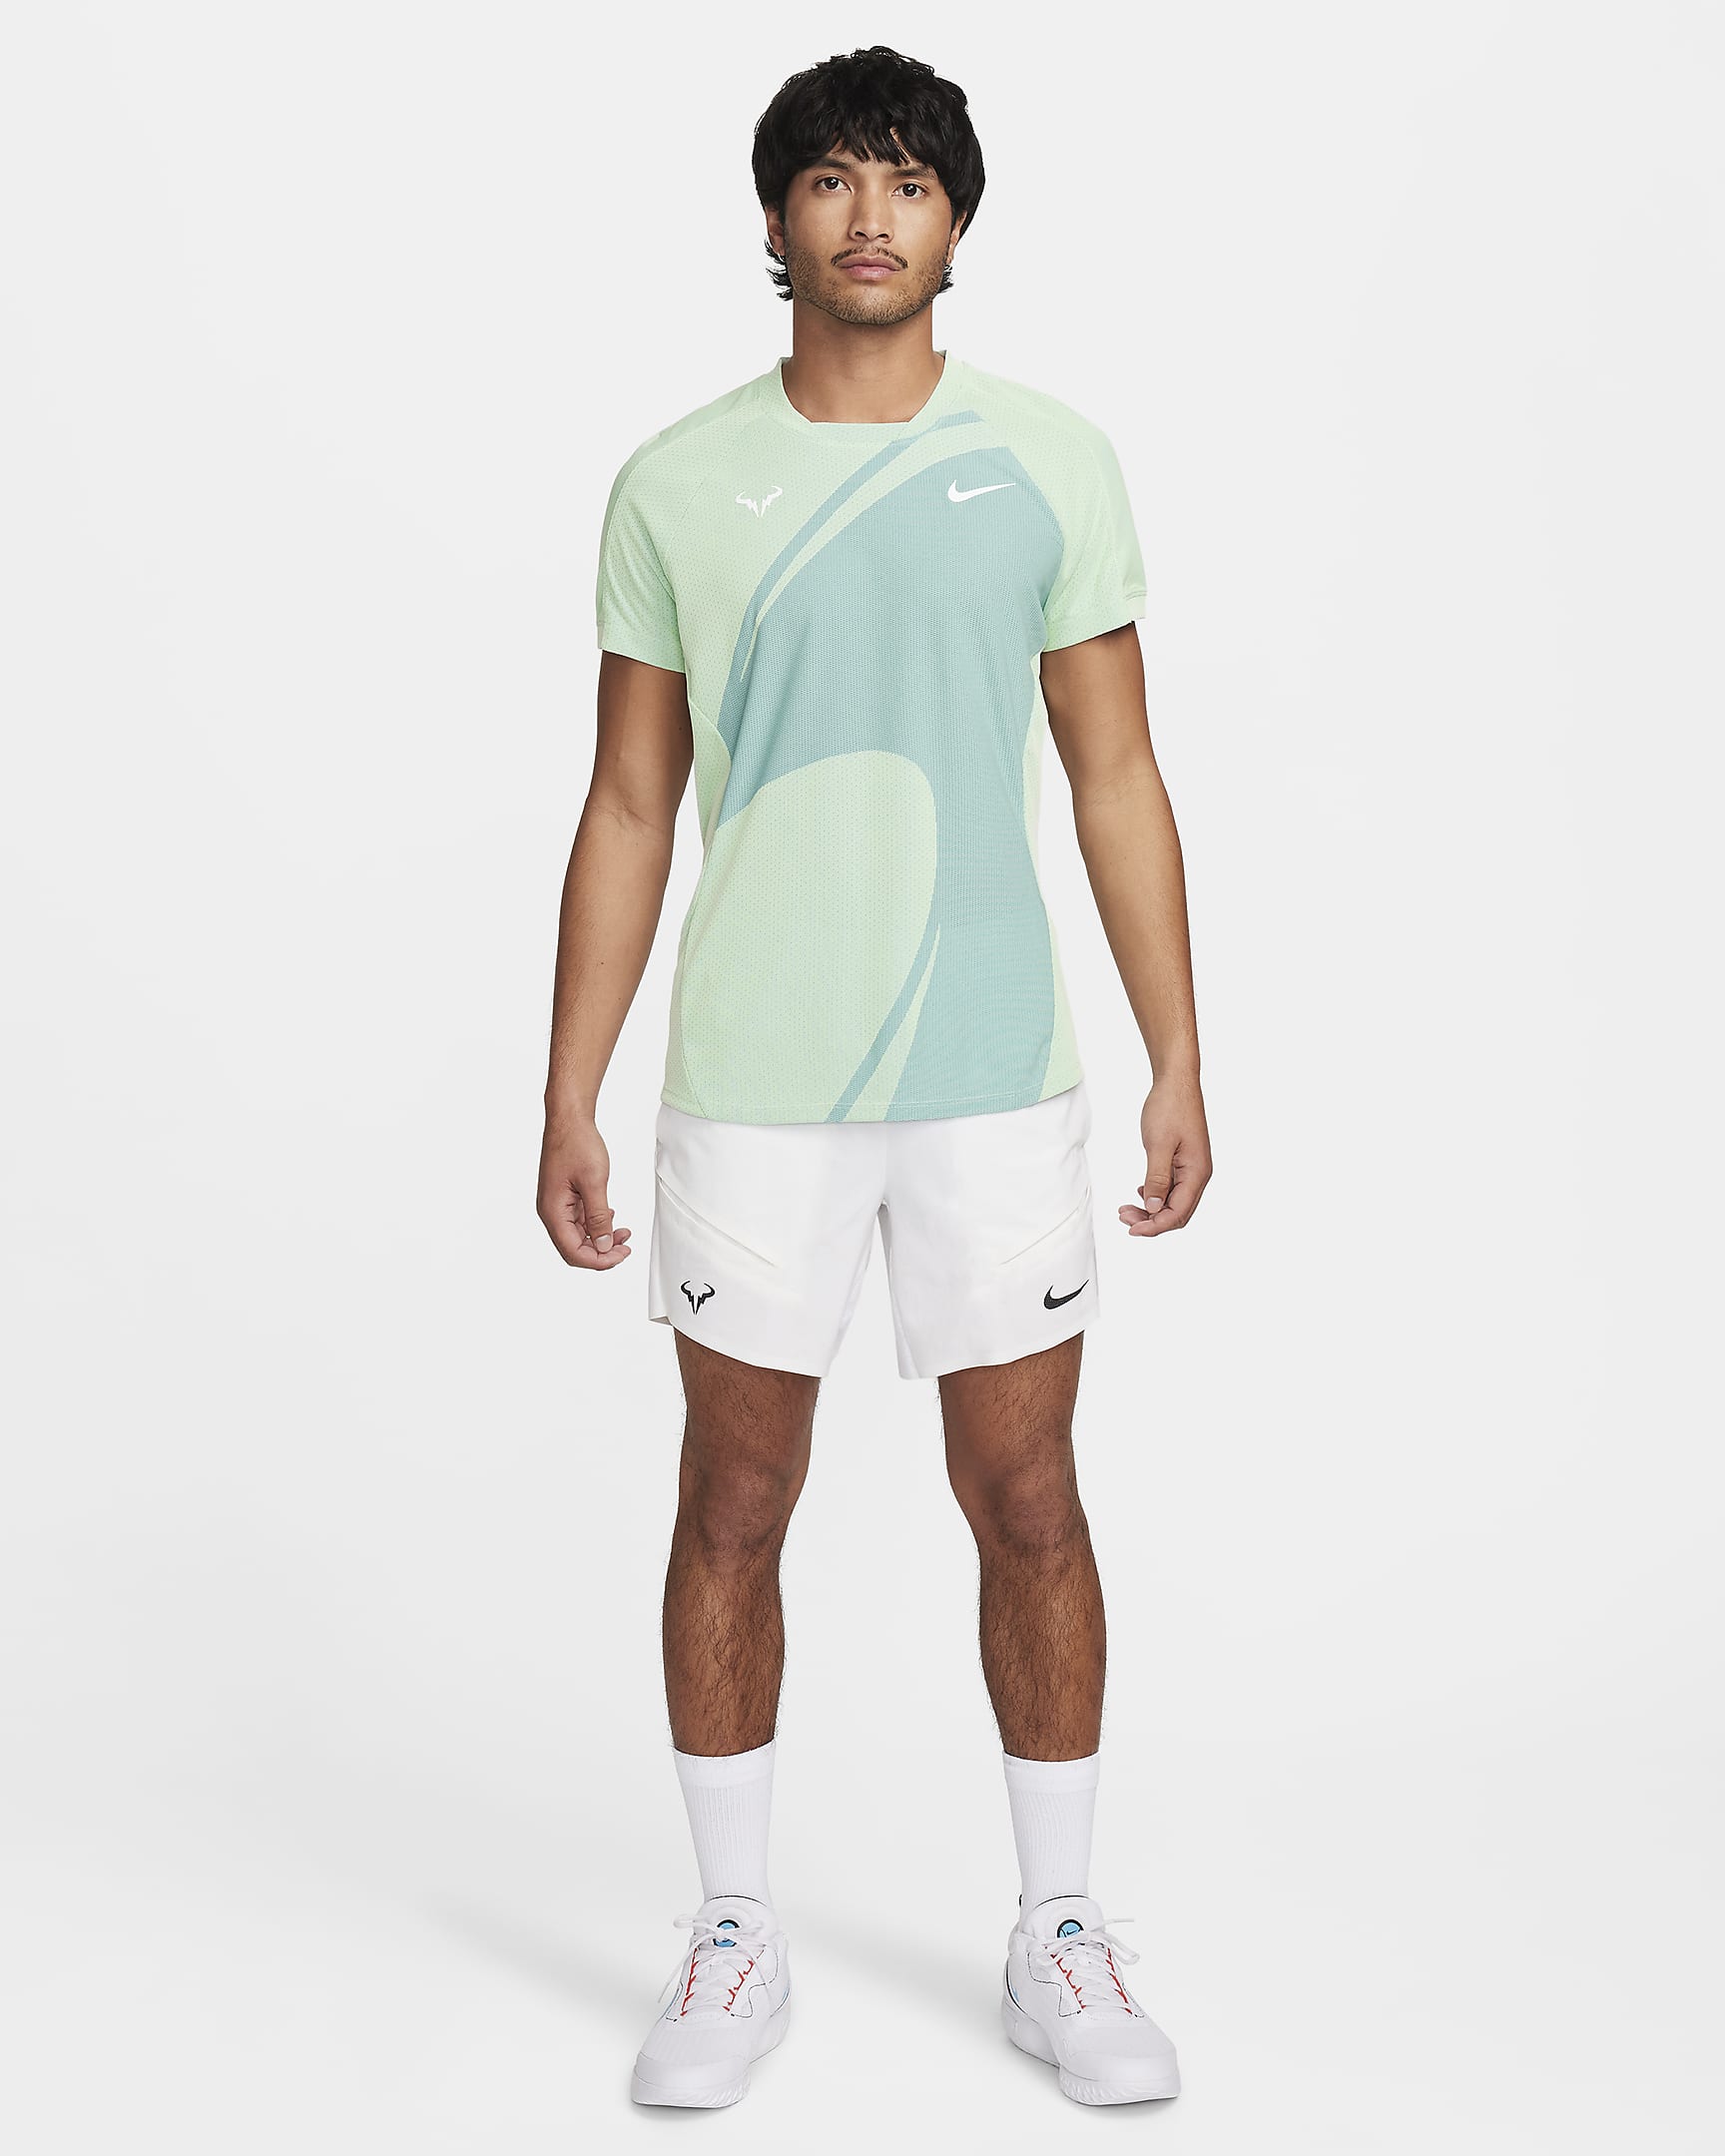 Rafa Men's Nike Dri-FIT ADV Short-Sleeve Tennis Top. Nike NO